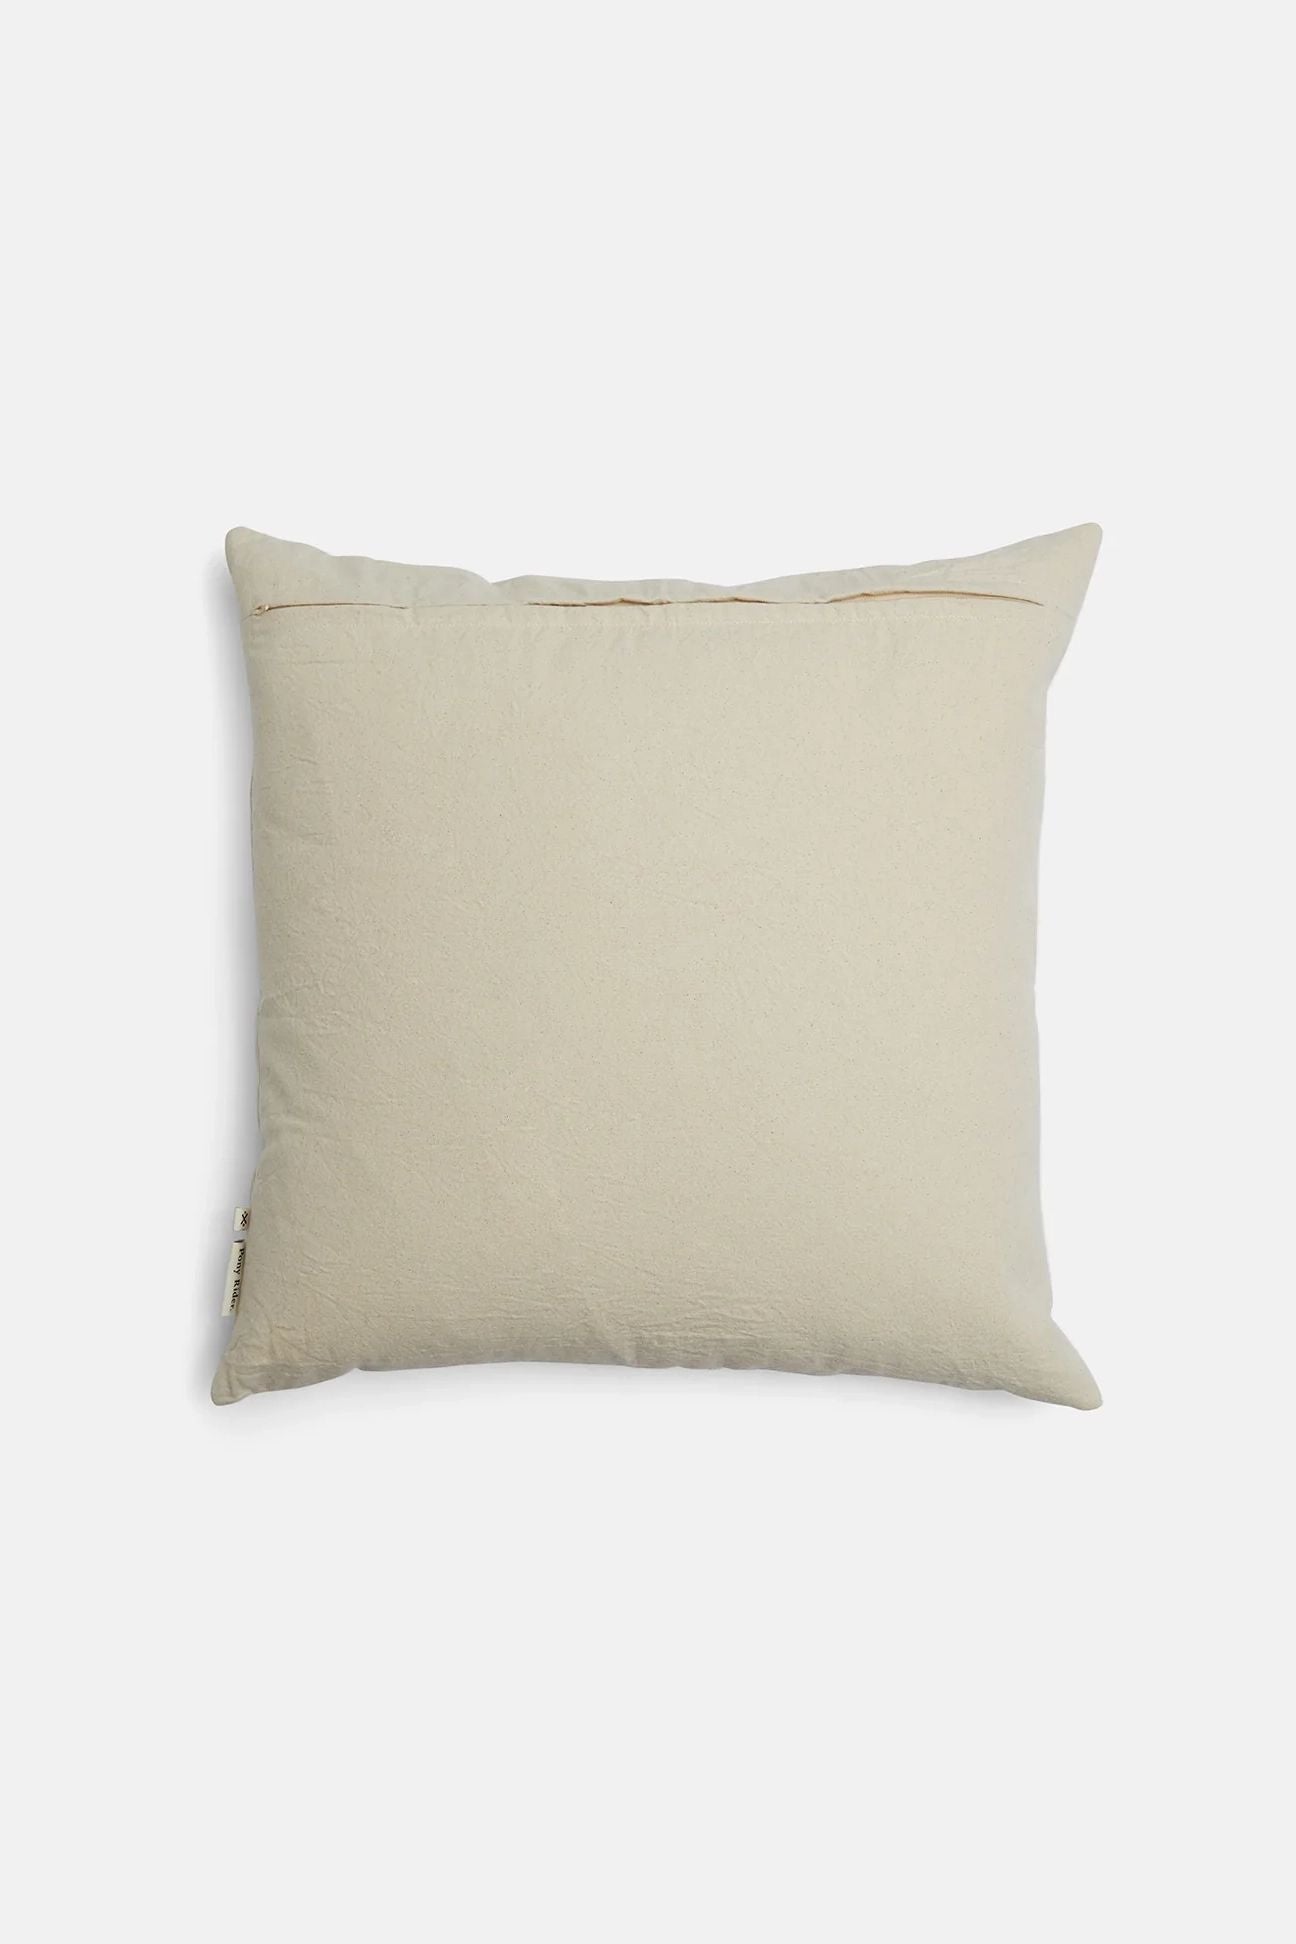 wanderful square cushion cover hessian